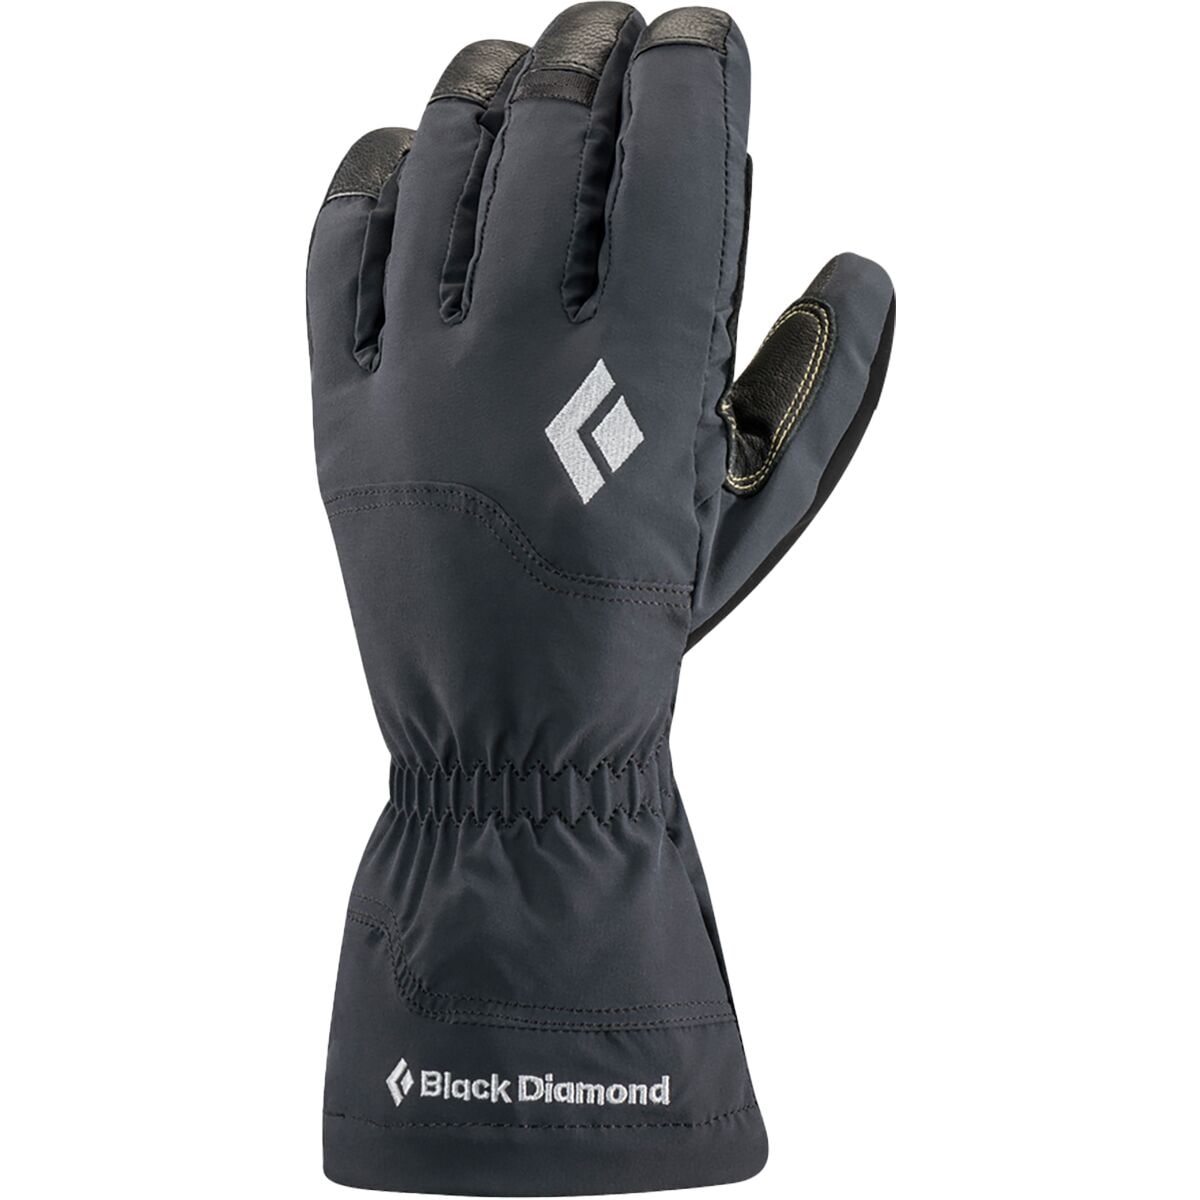 Black Diamond Glissade Glove - Men's Black